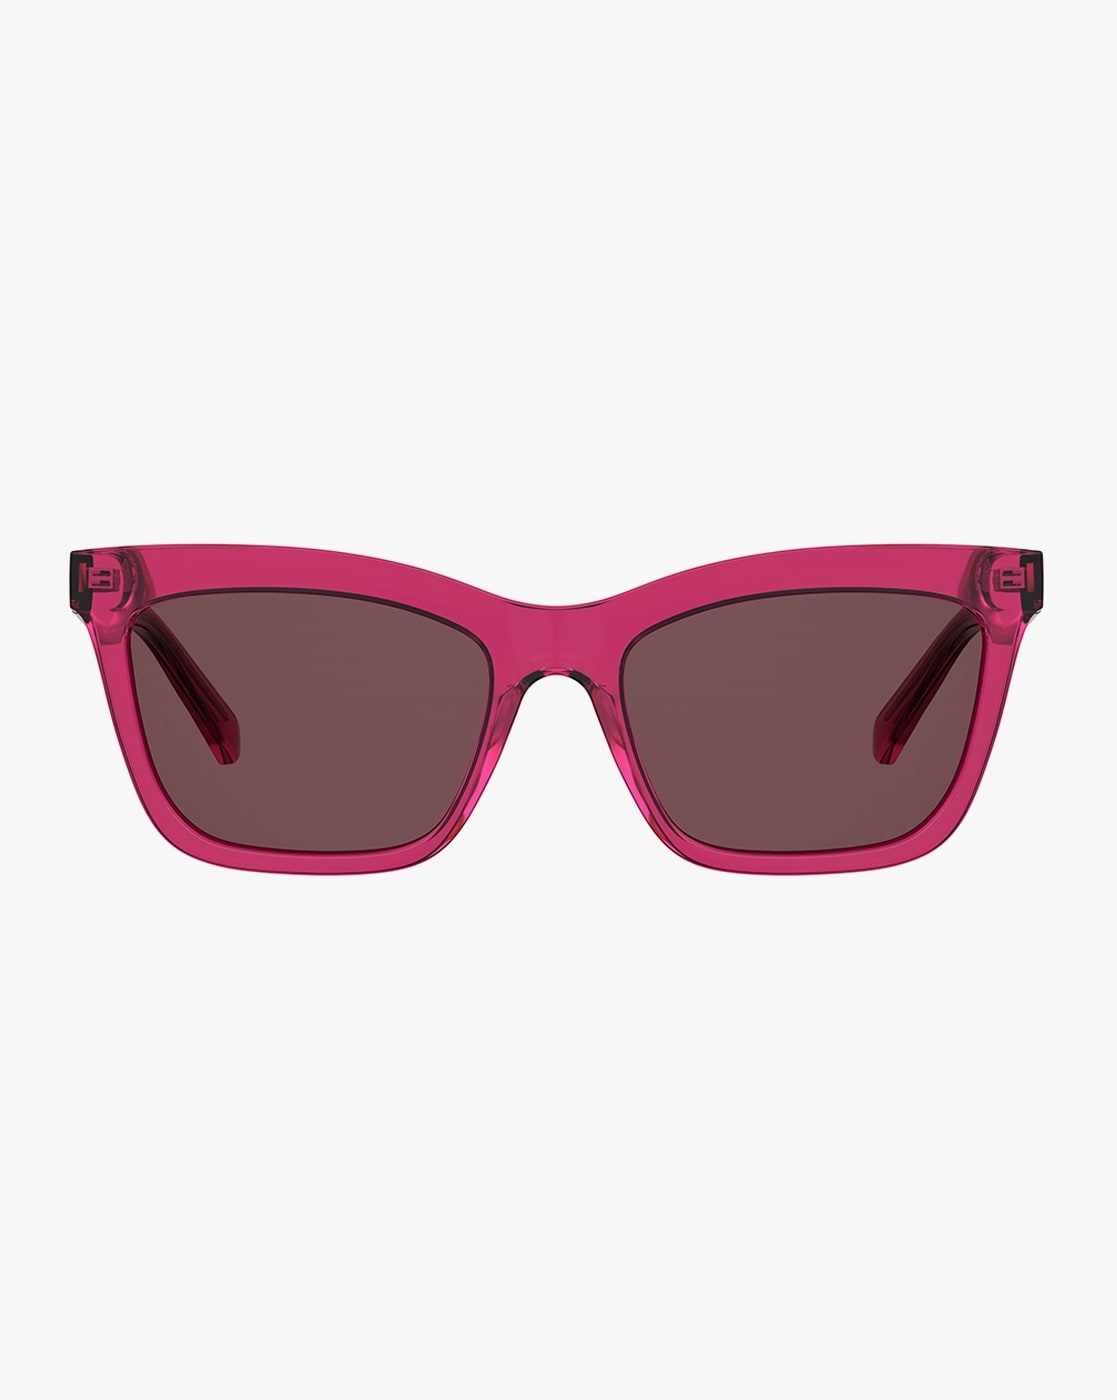 ClearDekho Pink Full Rim Cateye -Kids Computer Glasses (5-8 Years) -  ClearDekho - Eyeglasses, Sunglasses, Contact Lens, Frames